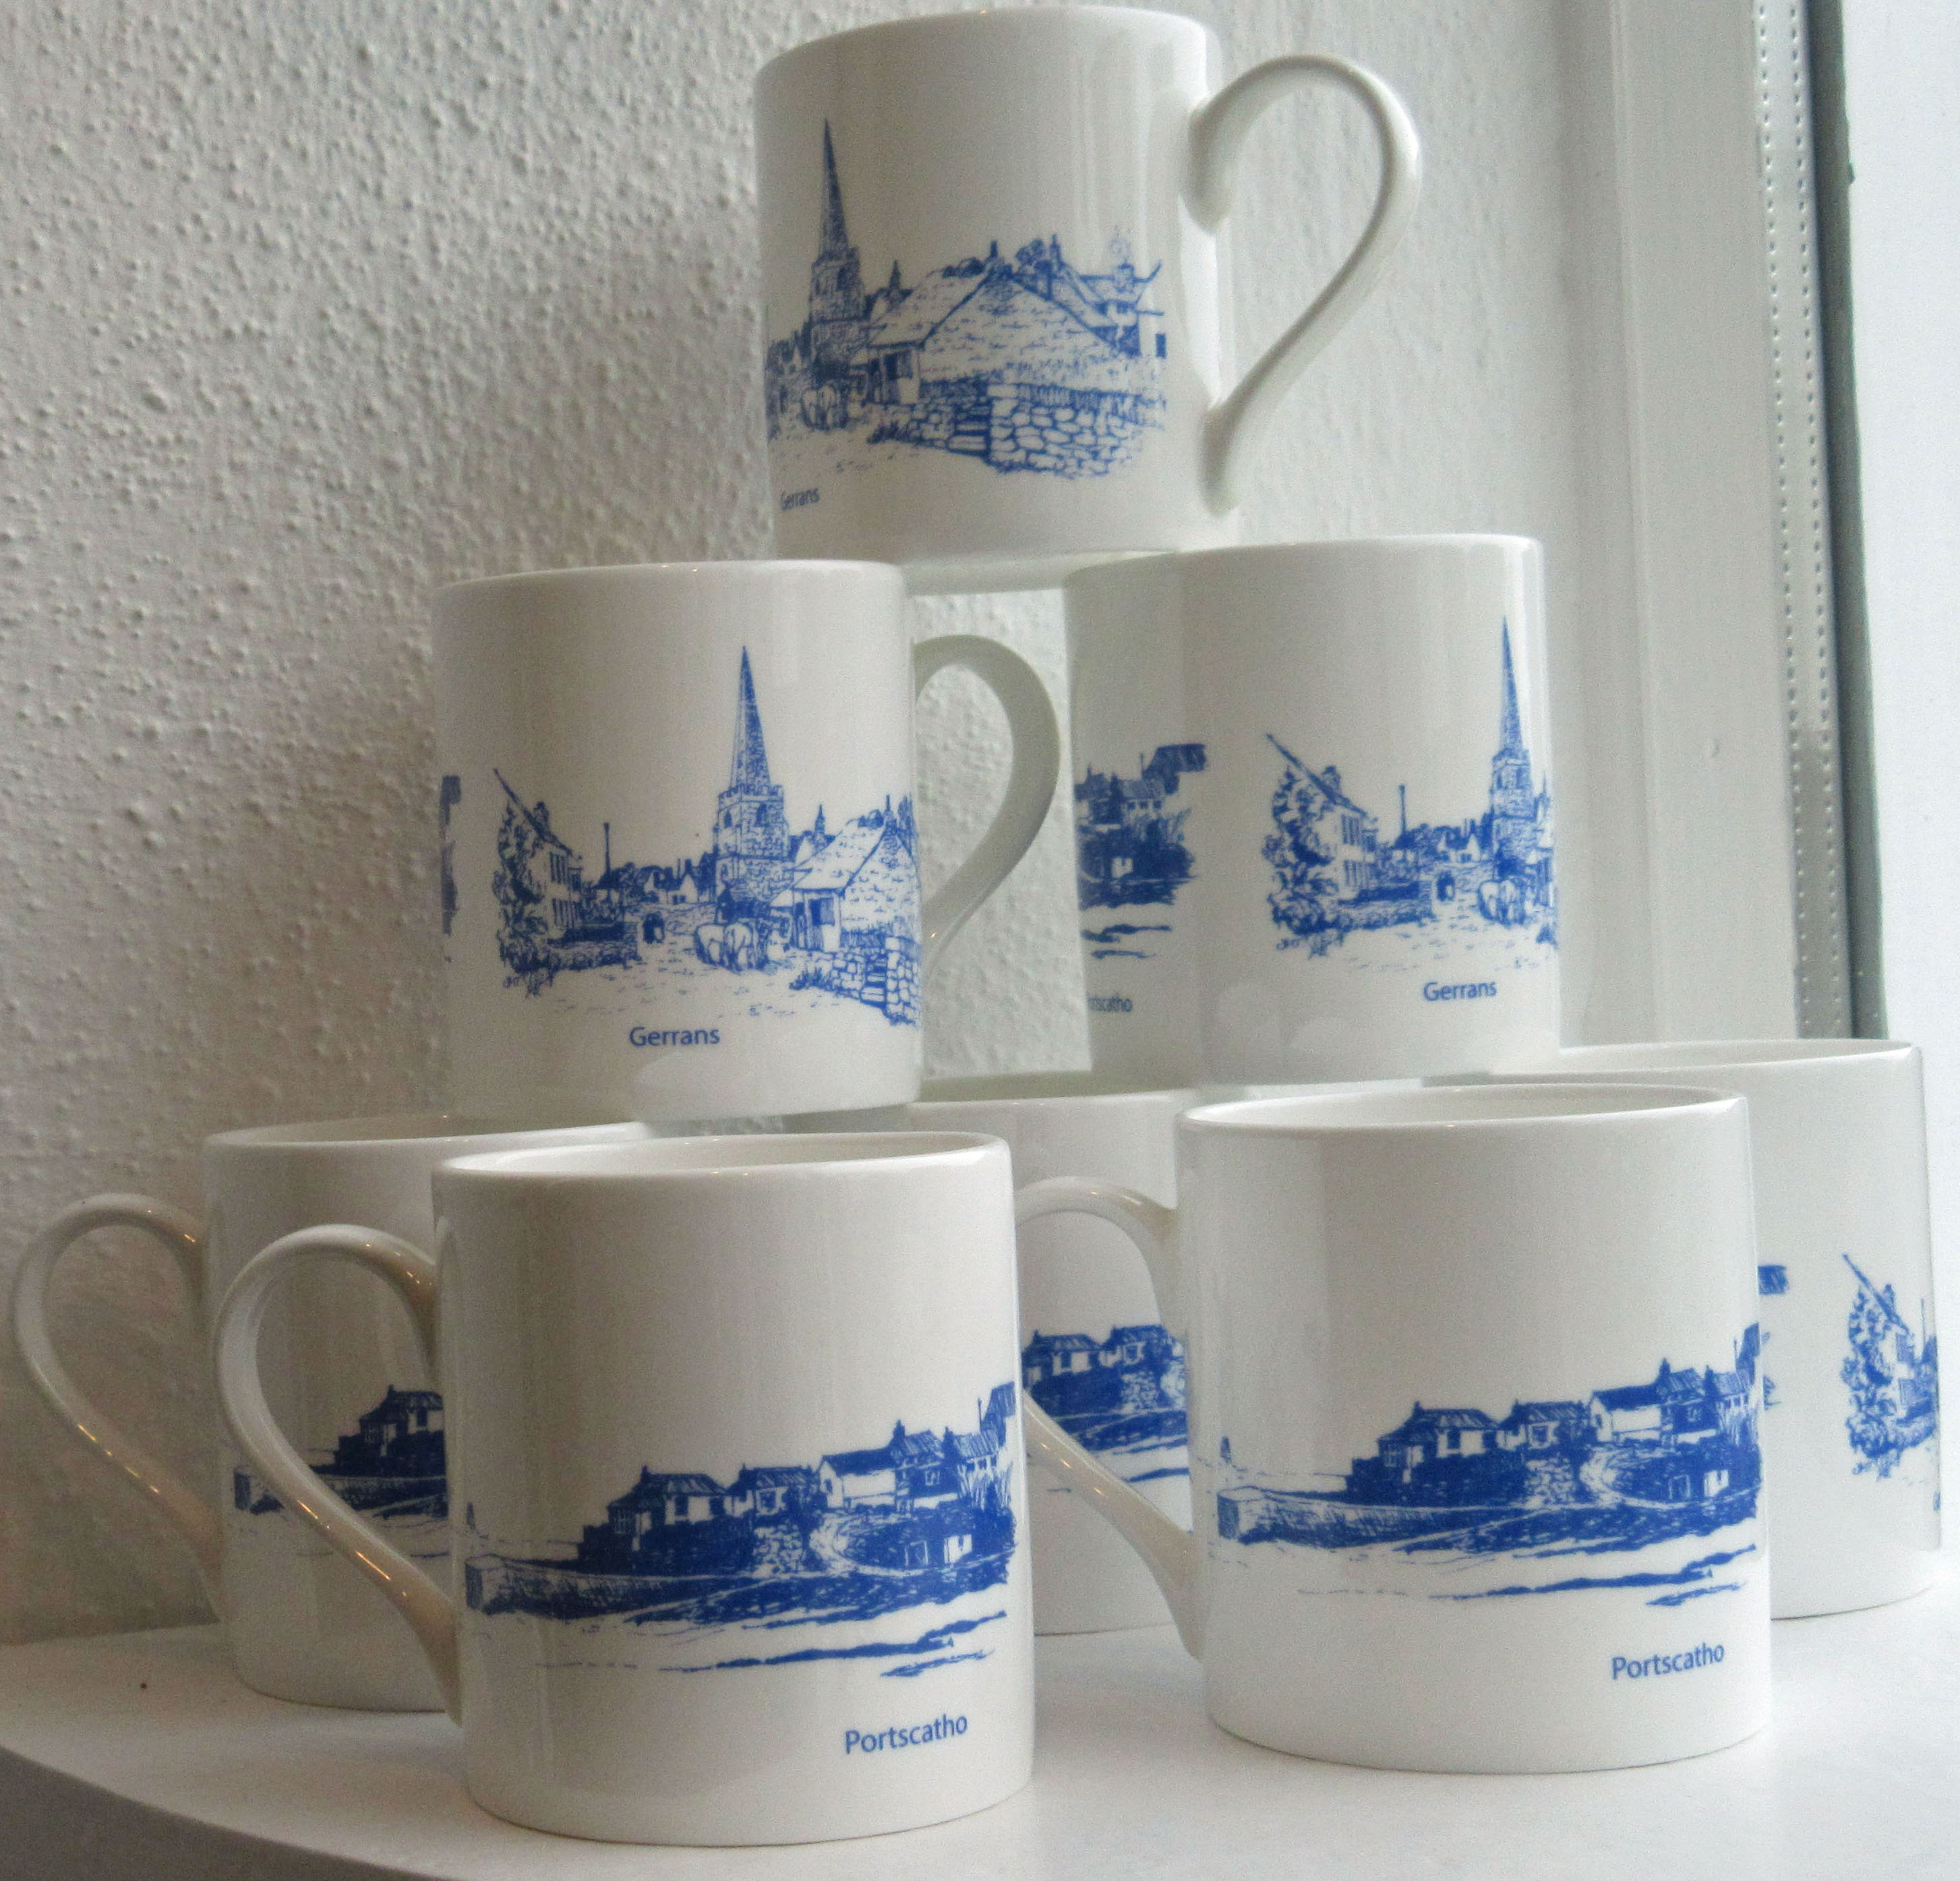 St Gerrans & Portscatho mugs